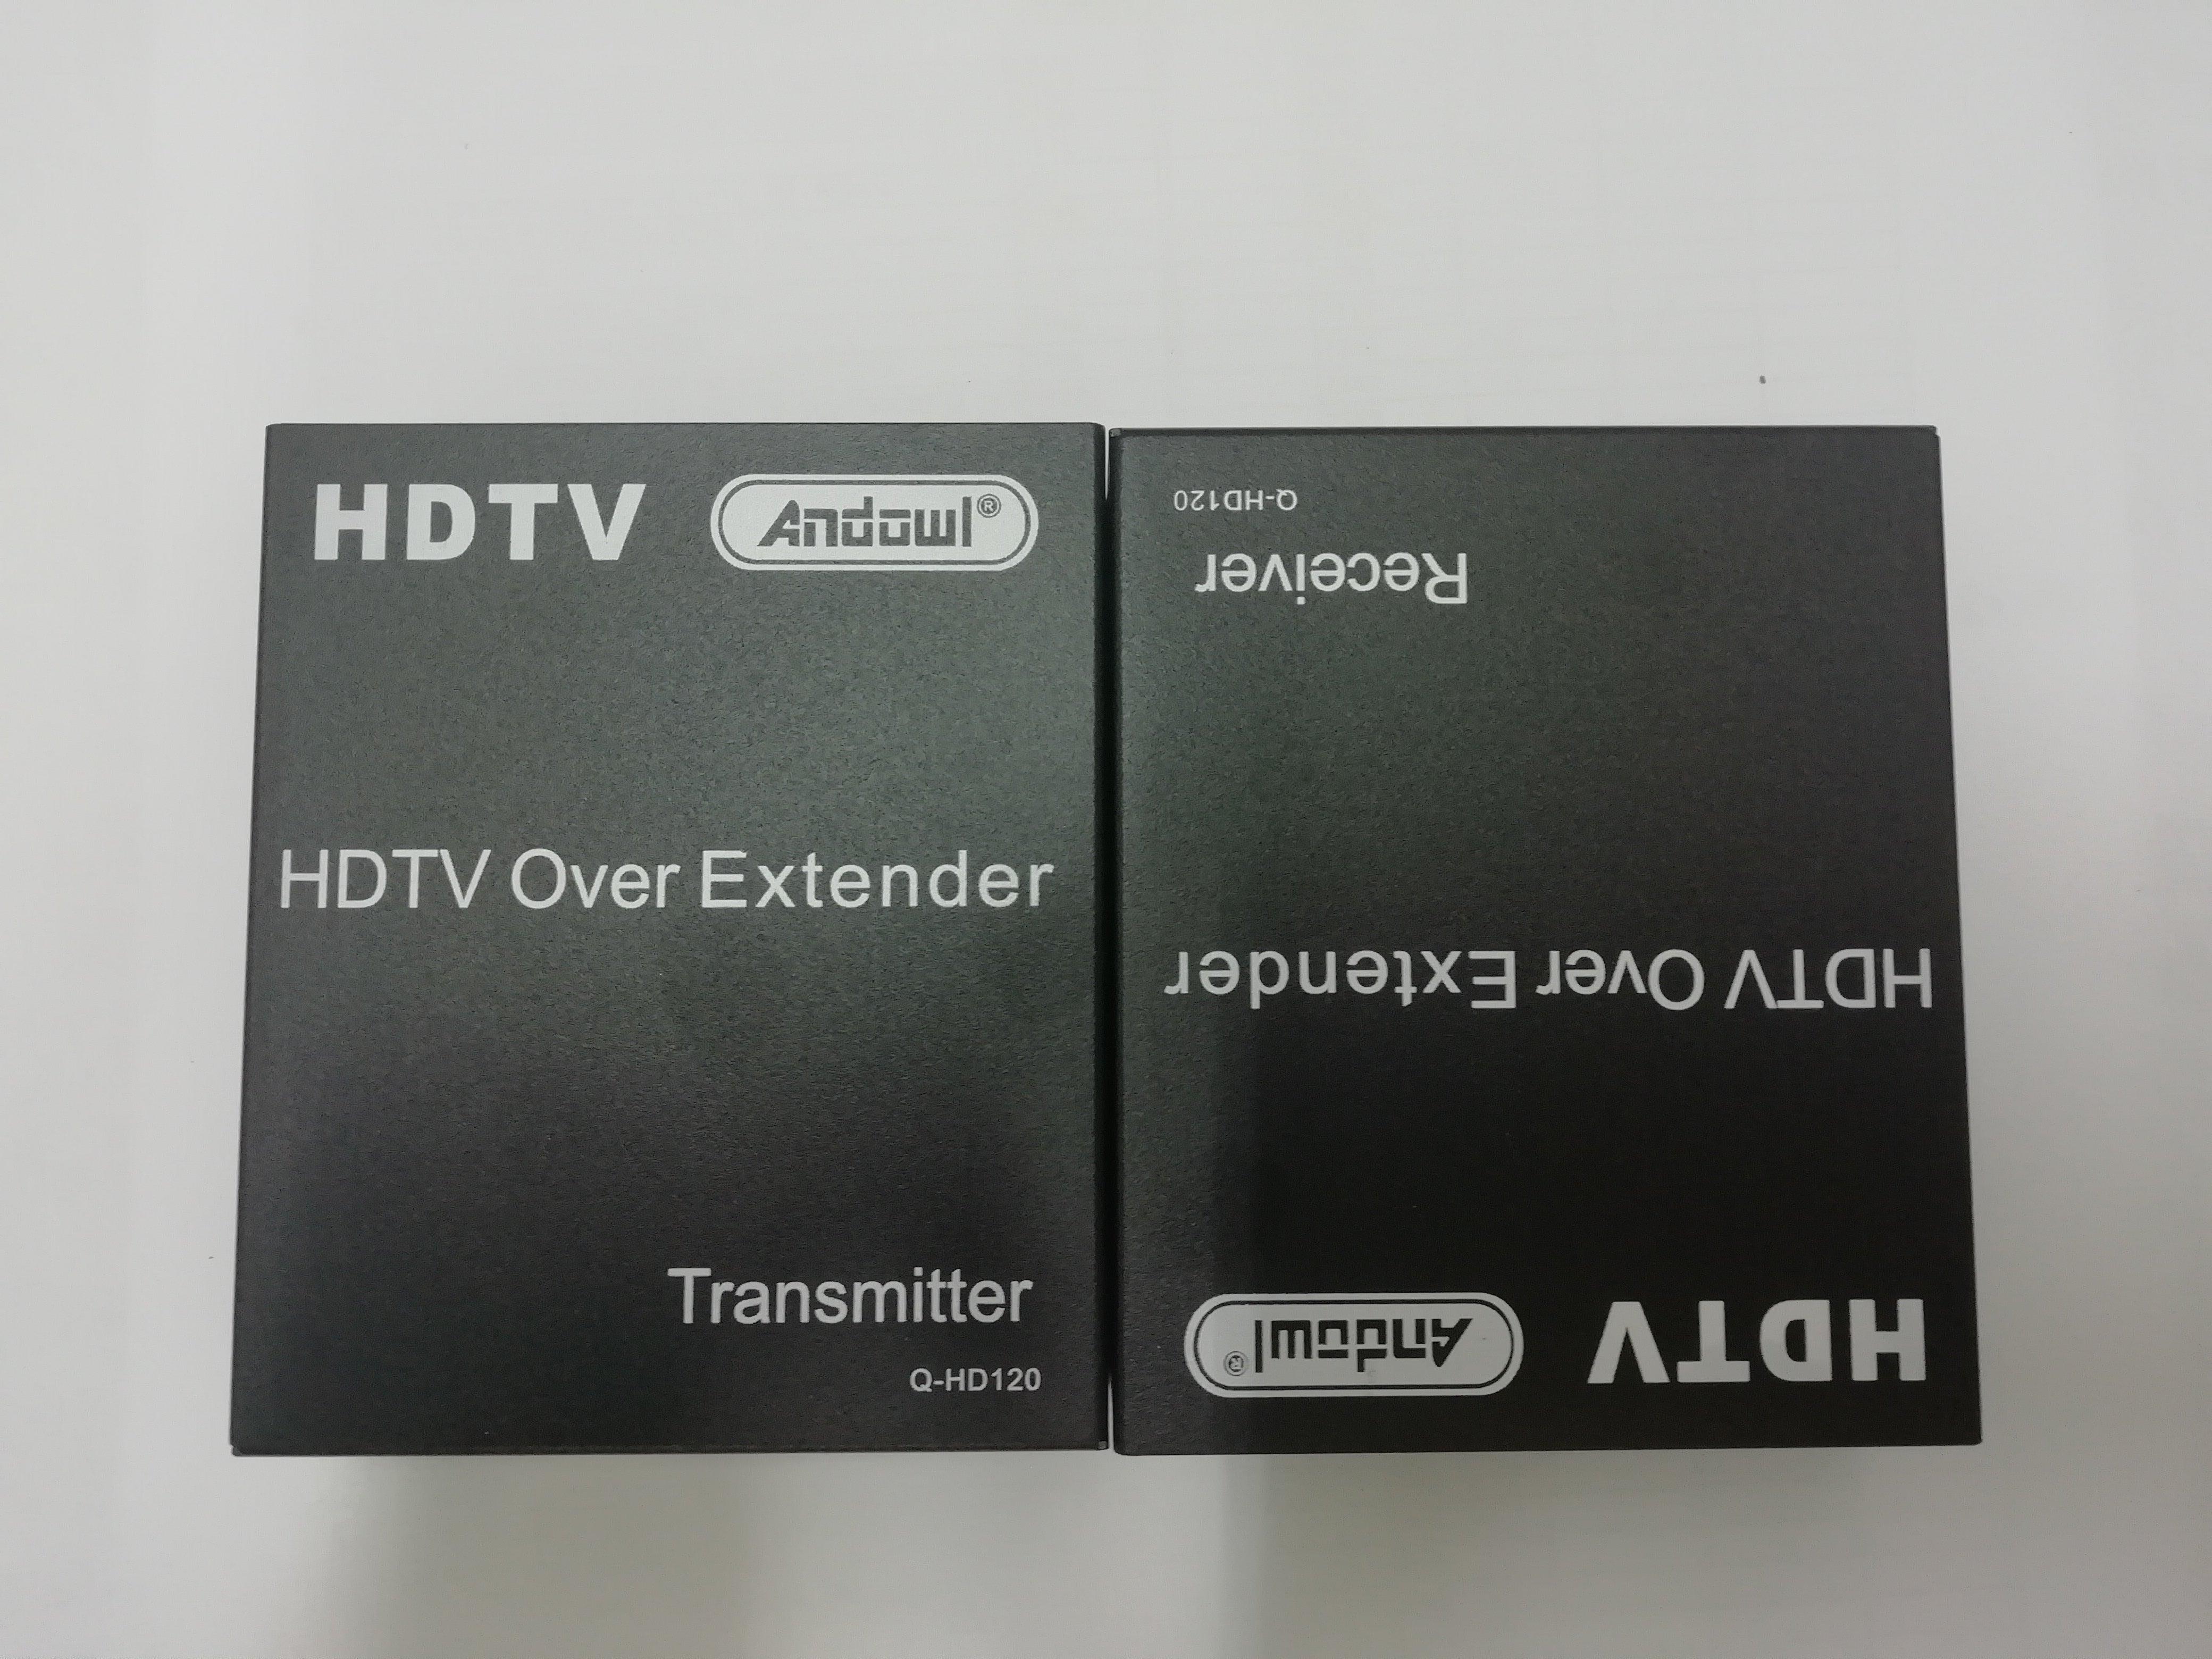 ANDOWL 4K HDMI EXTENDER 120M Q-HD120 - NeonSales